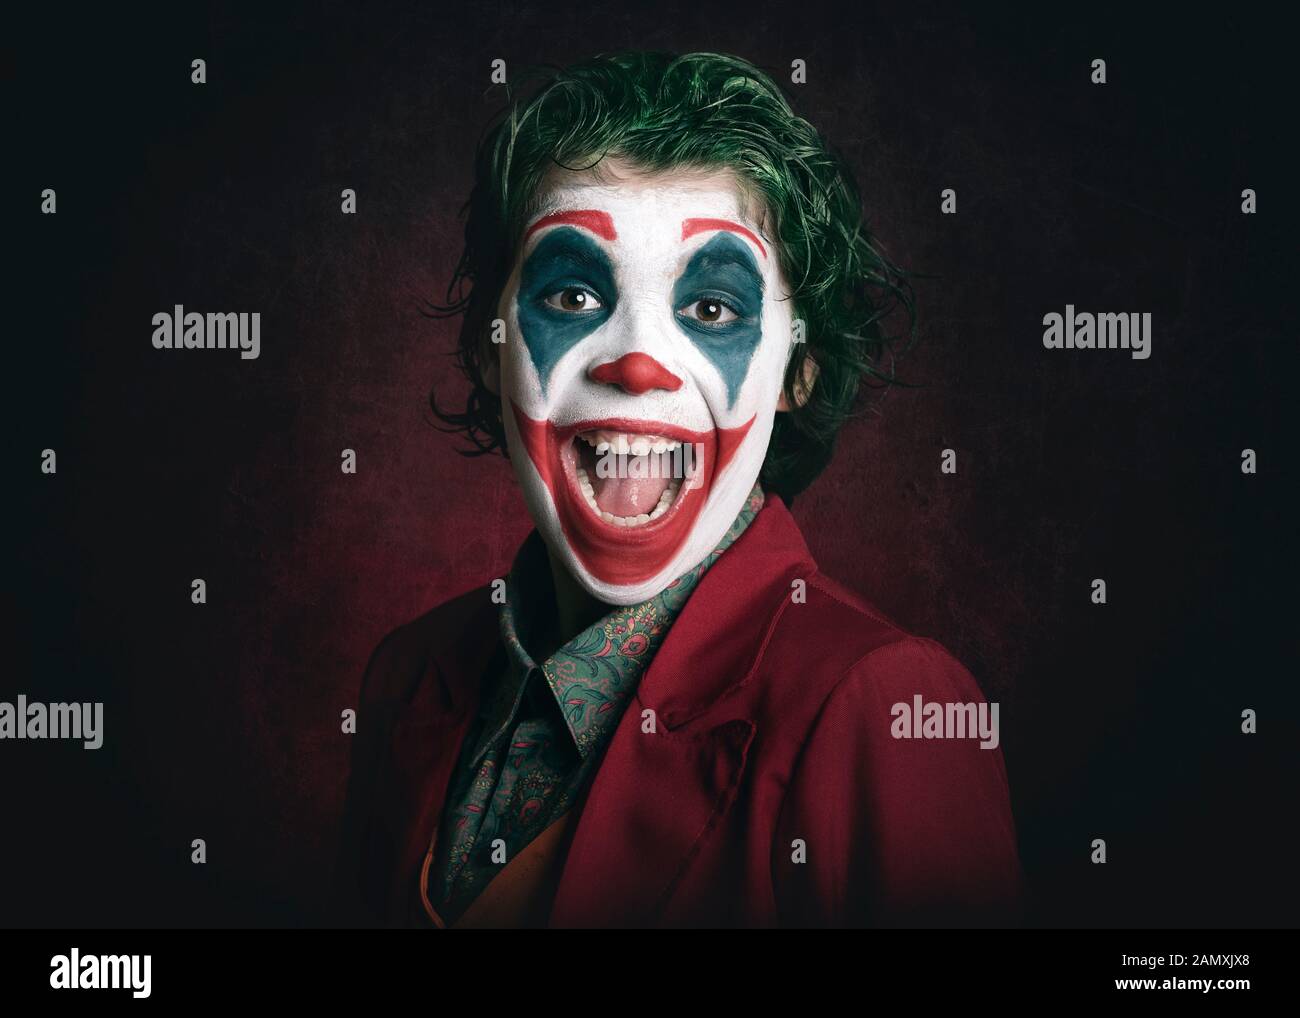 smiling boy dressed as Joker on dark background Stock Photo